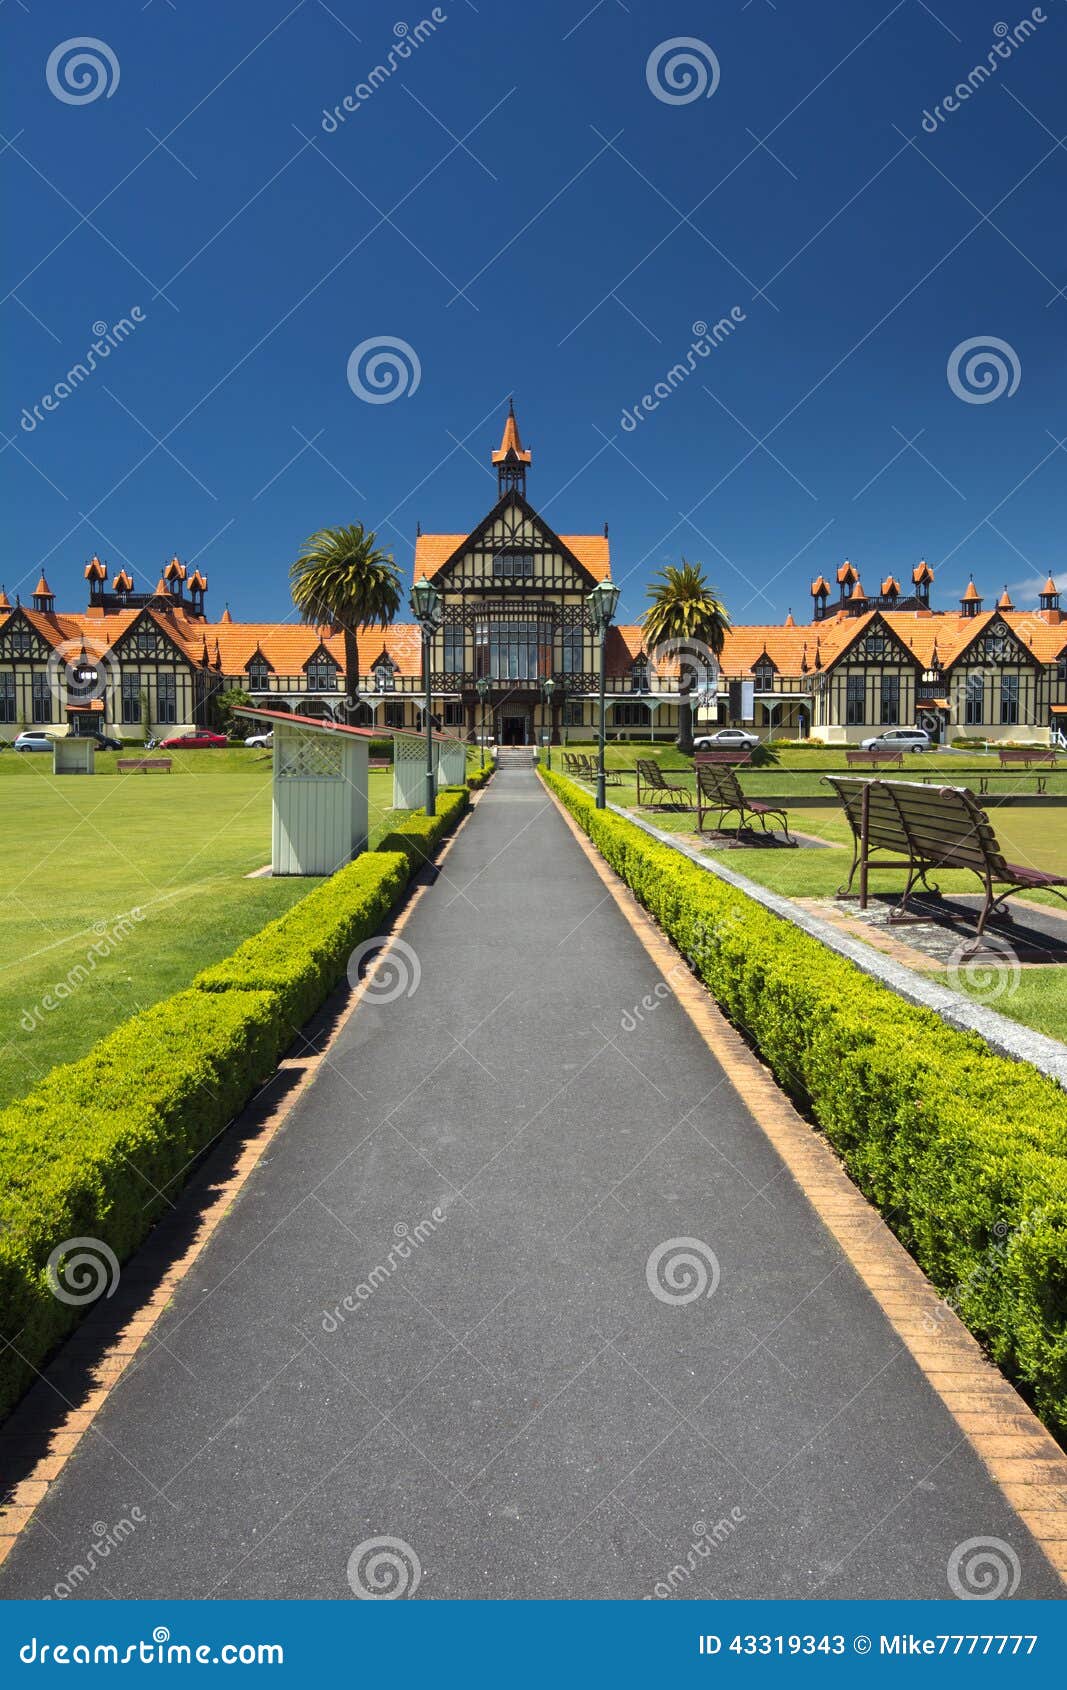 Government Gardens And Museum, Rotorua, New Zealand Stock Image - Image ...
